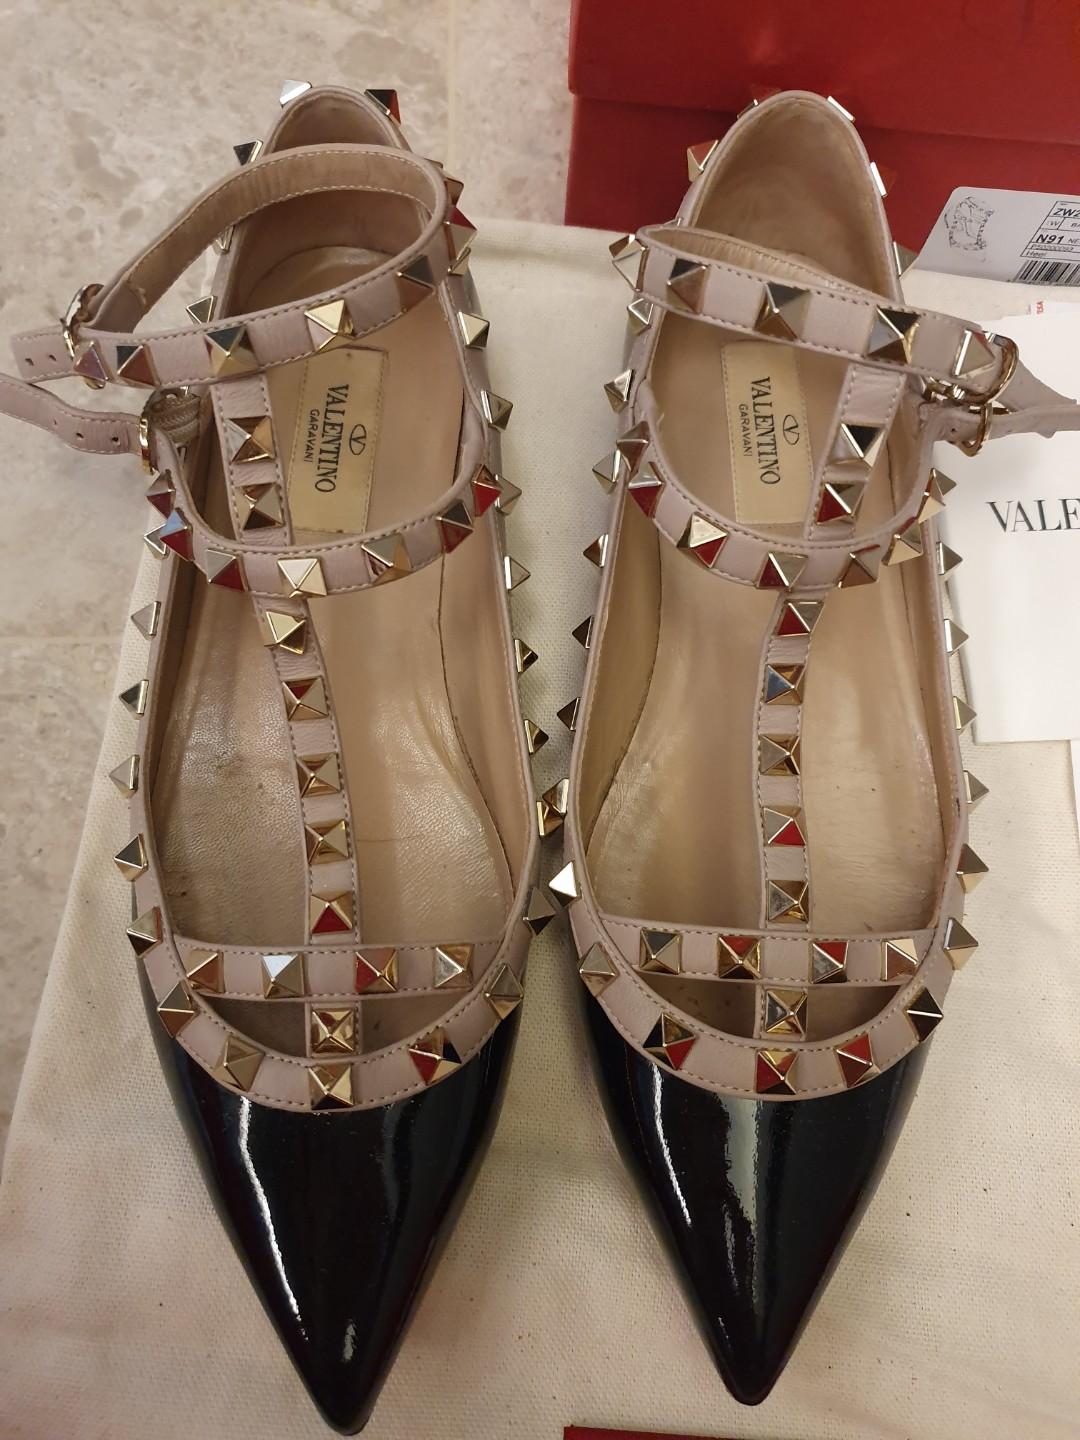 Valentino Rockstud Ballerina Flats Eur 37 1 2 Luxury Shoes On Carousell